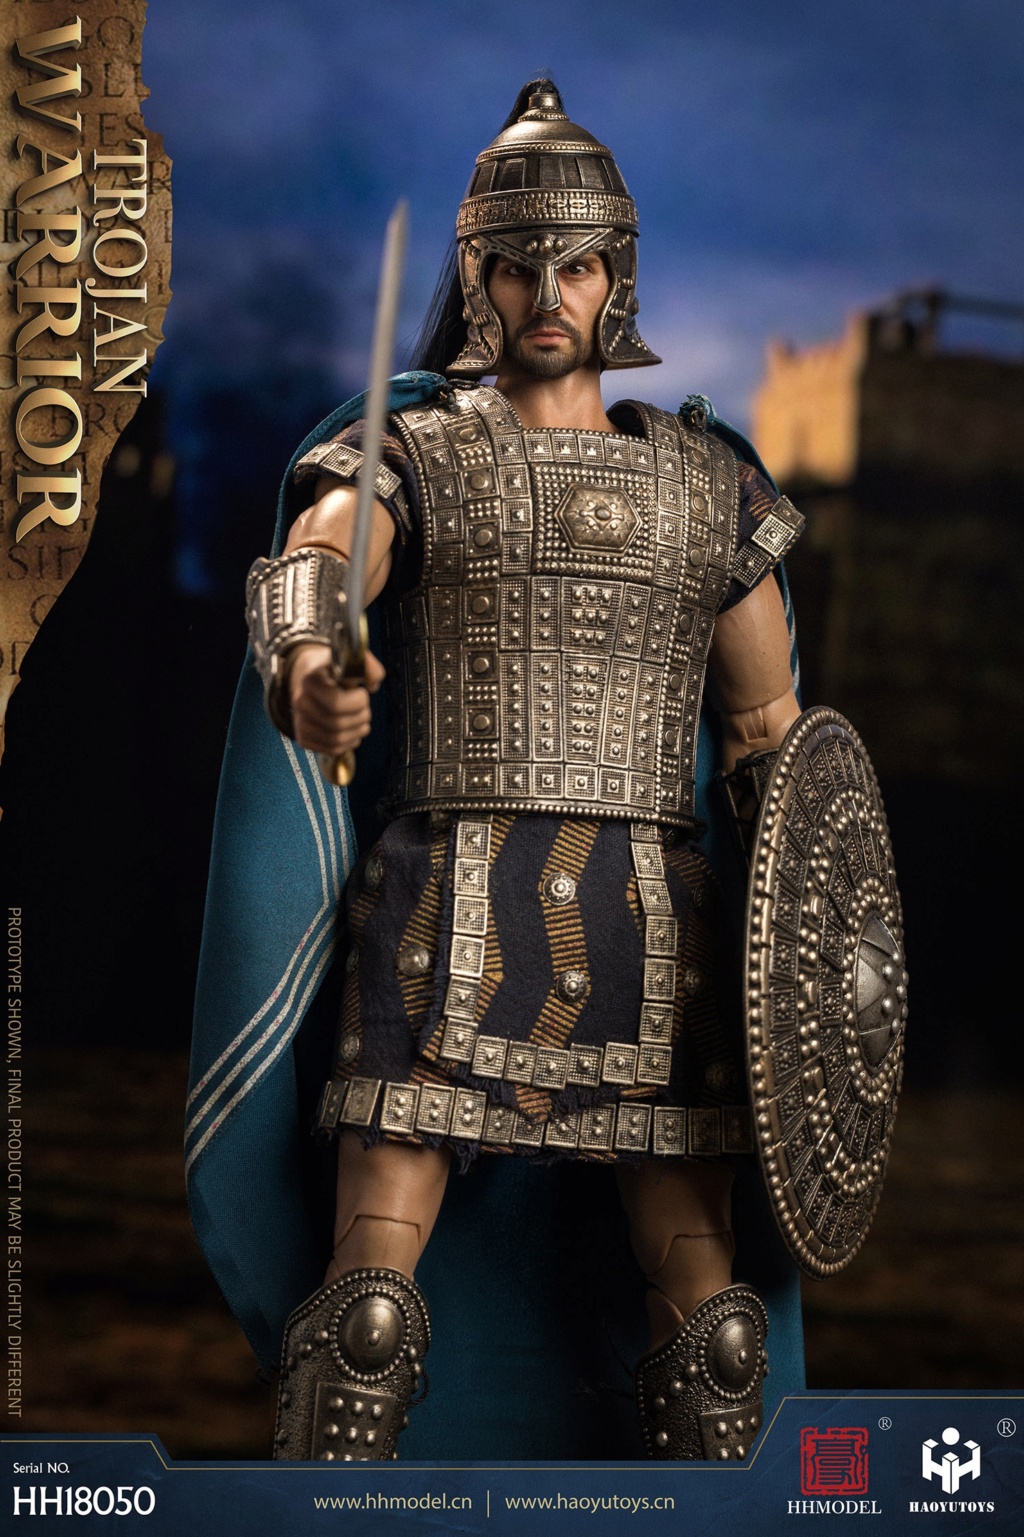 hhmodel - NEW PRODUCT: HHMODEL & HAOYUTOYS: 1/6 Imperial Legion - Trojan Warrior Action Figure #HH18050 13273410